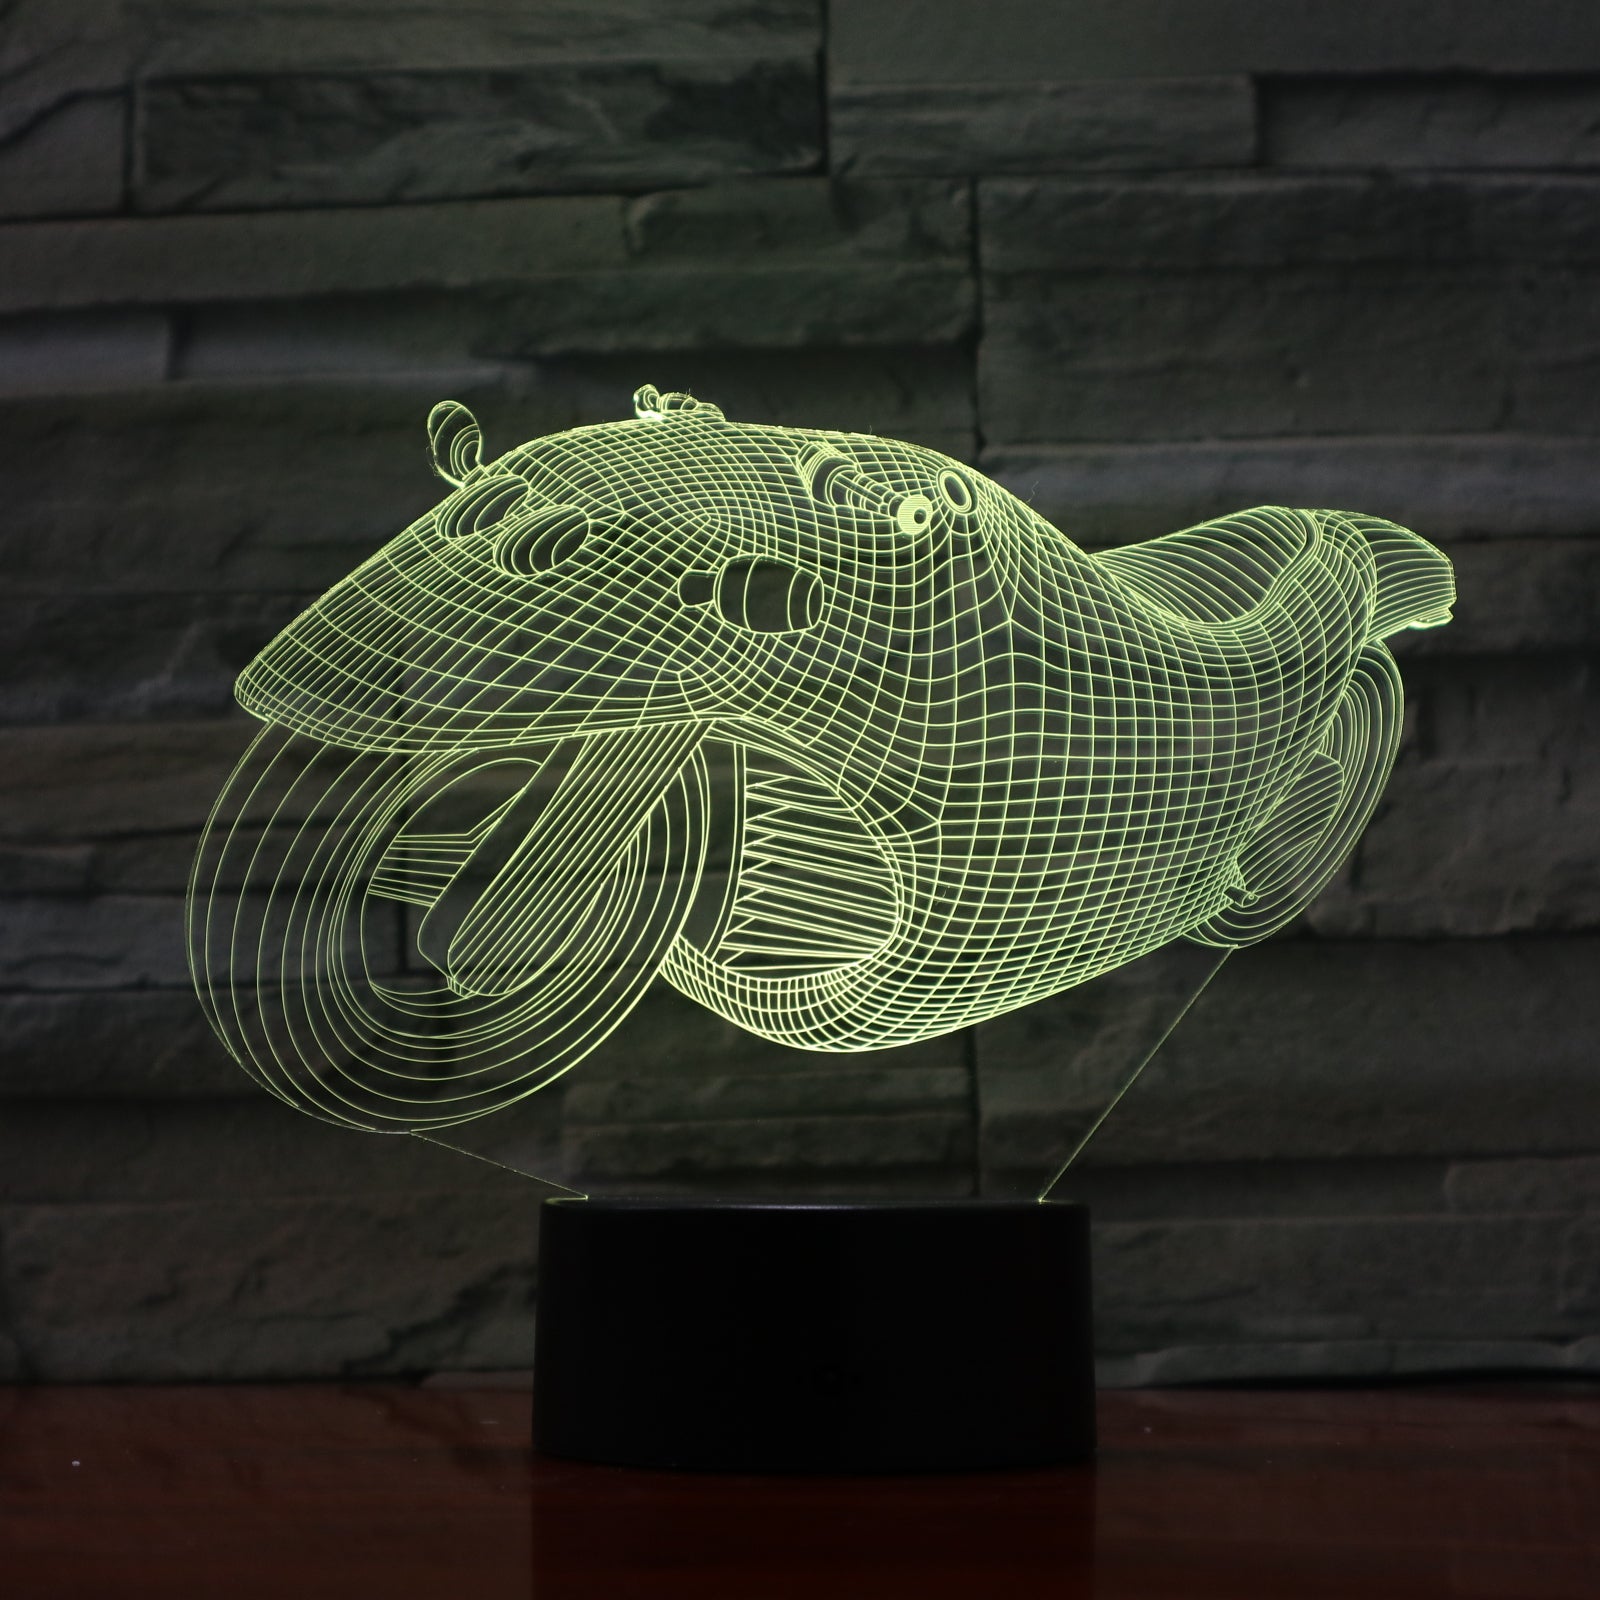 Motobike 1 - 3D Optical Illusion LED Lamp Hologram